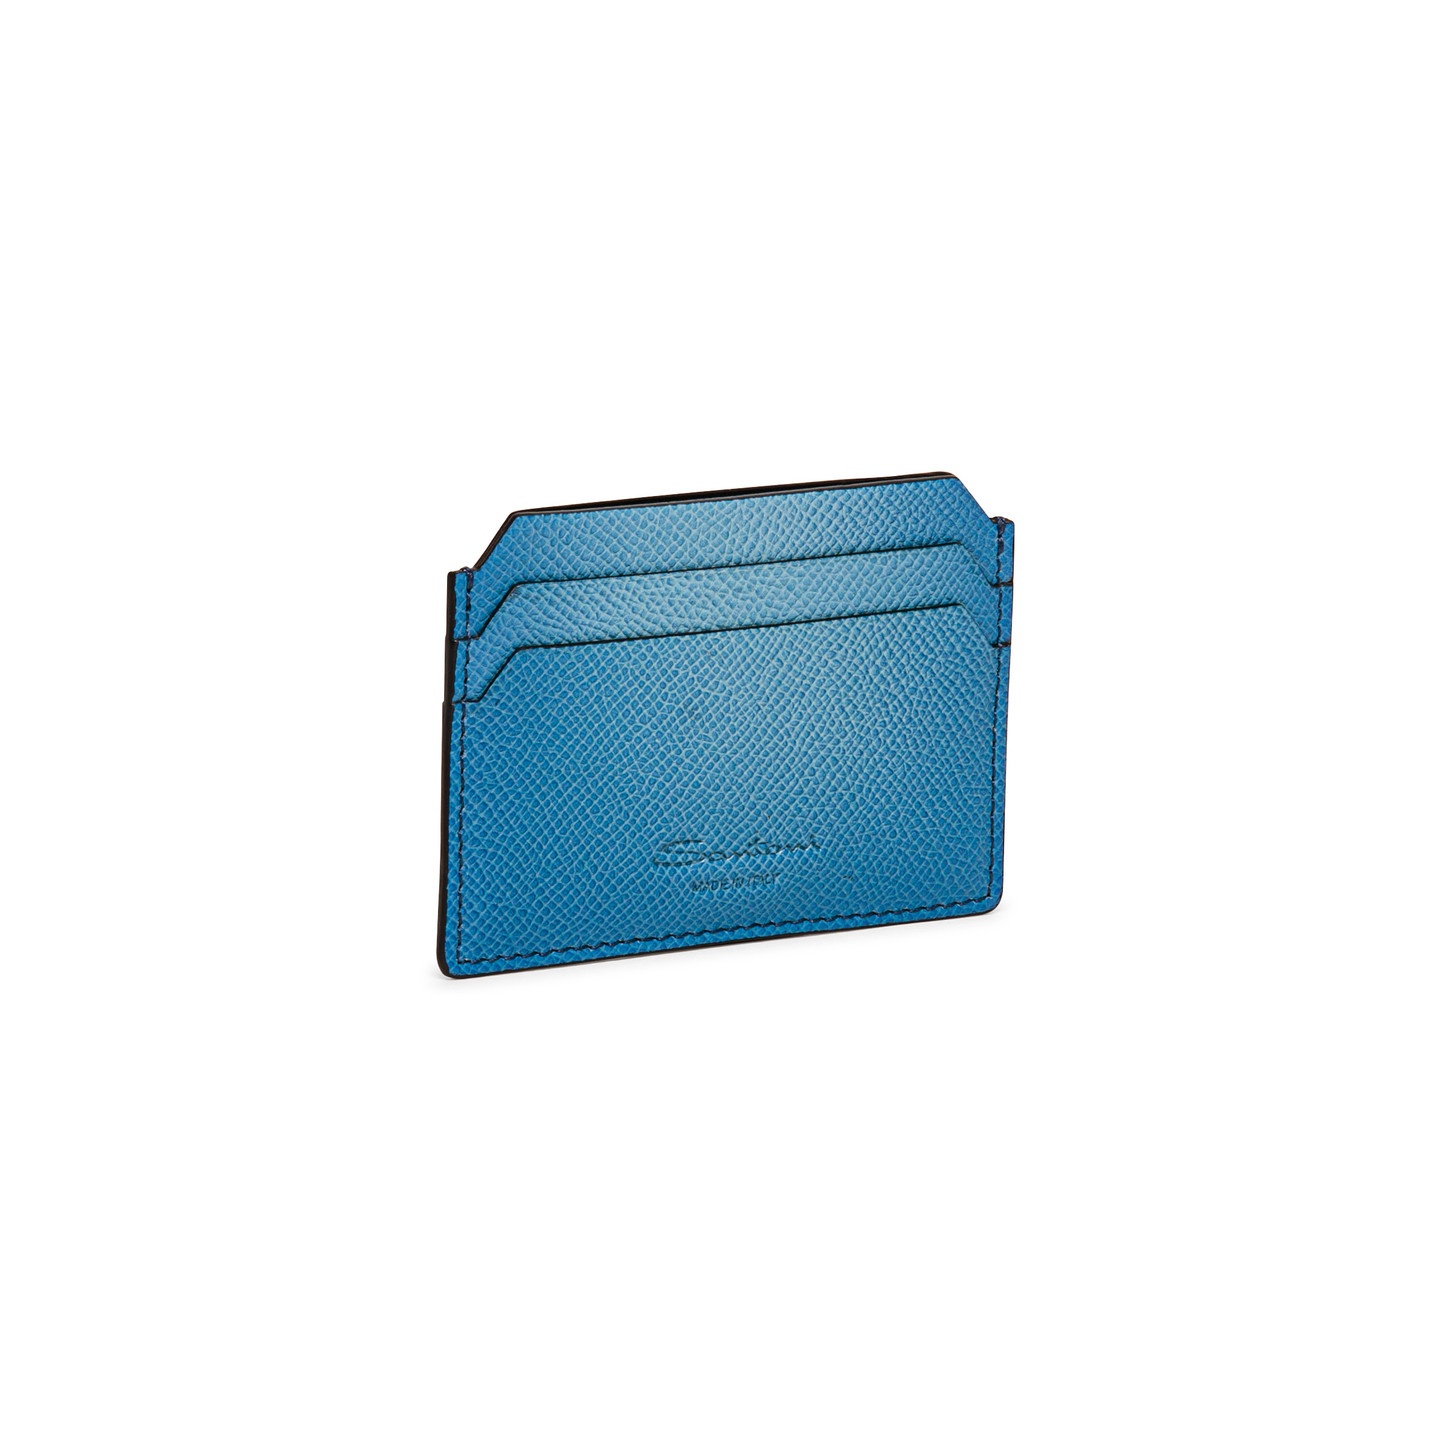 Light blue saffiano leather credit card holder - 5